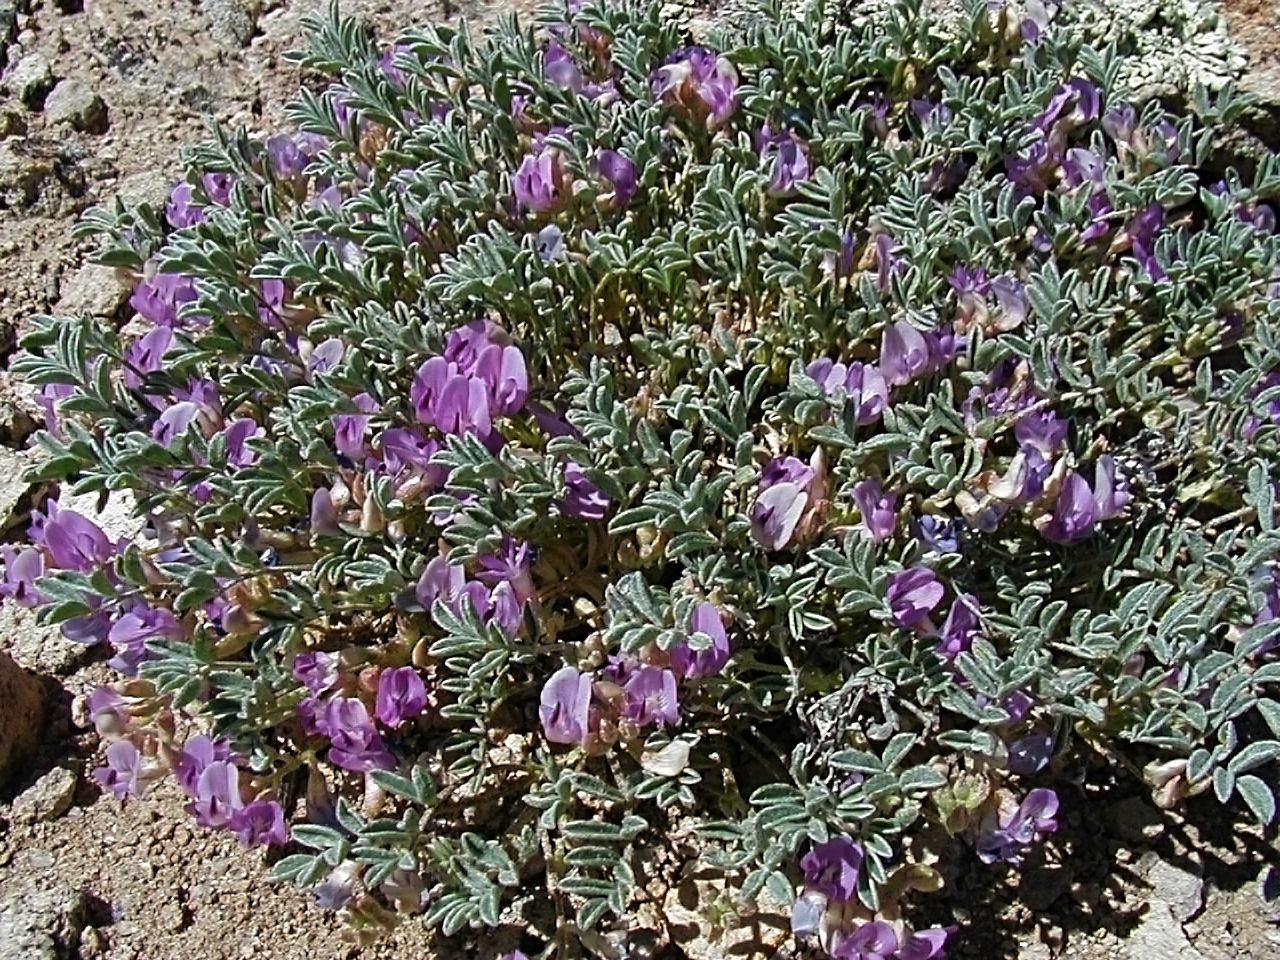 Astragalus beatleyae image